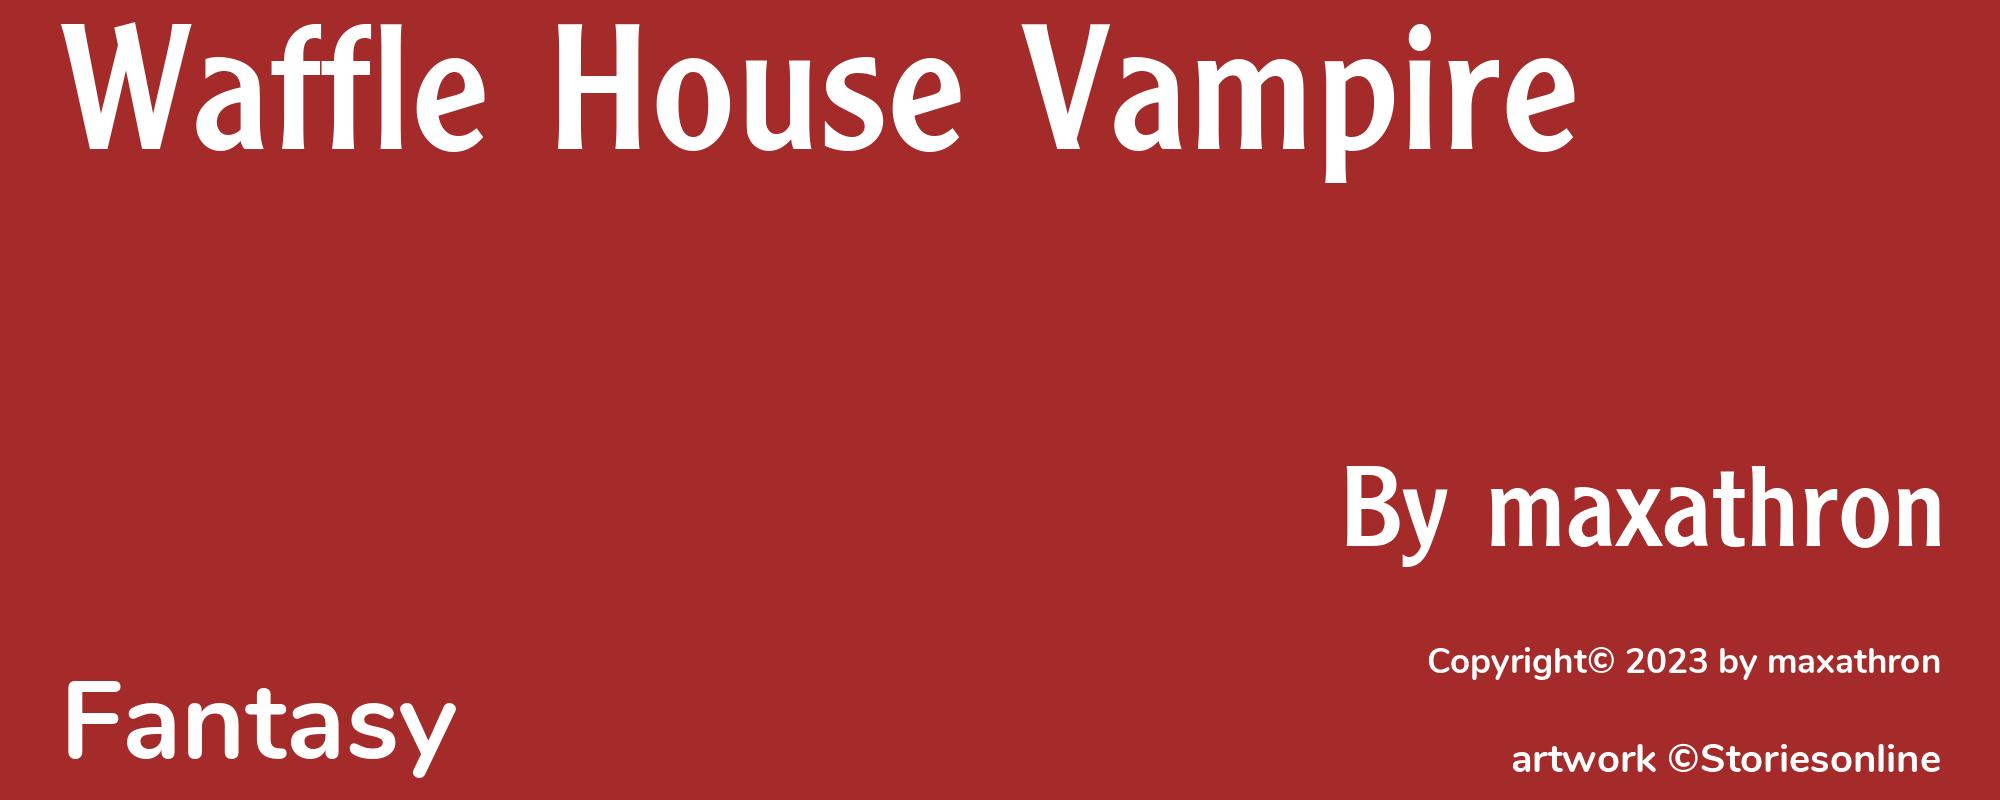 Waffle House Vampire - Cover